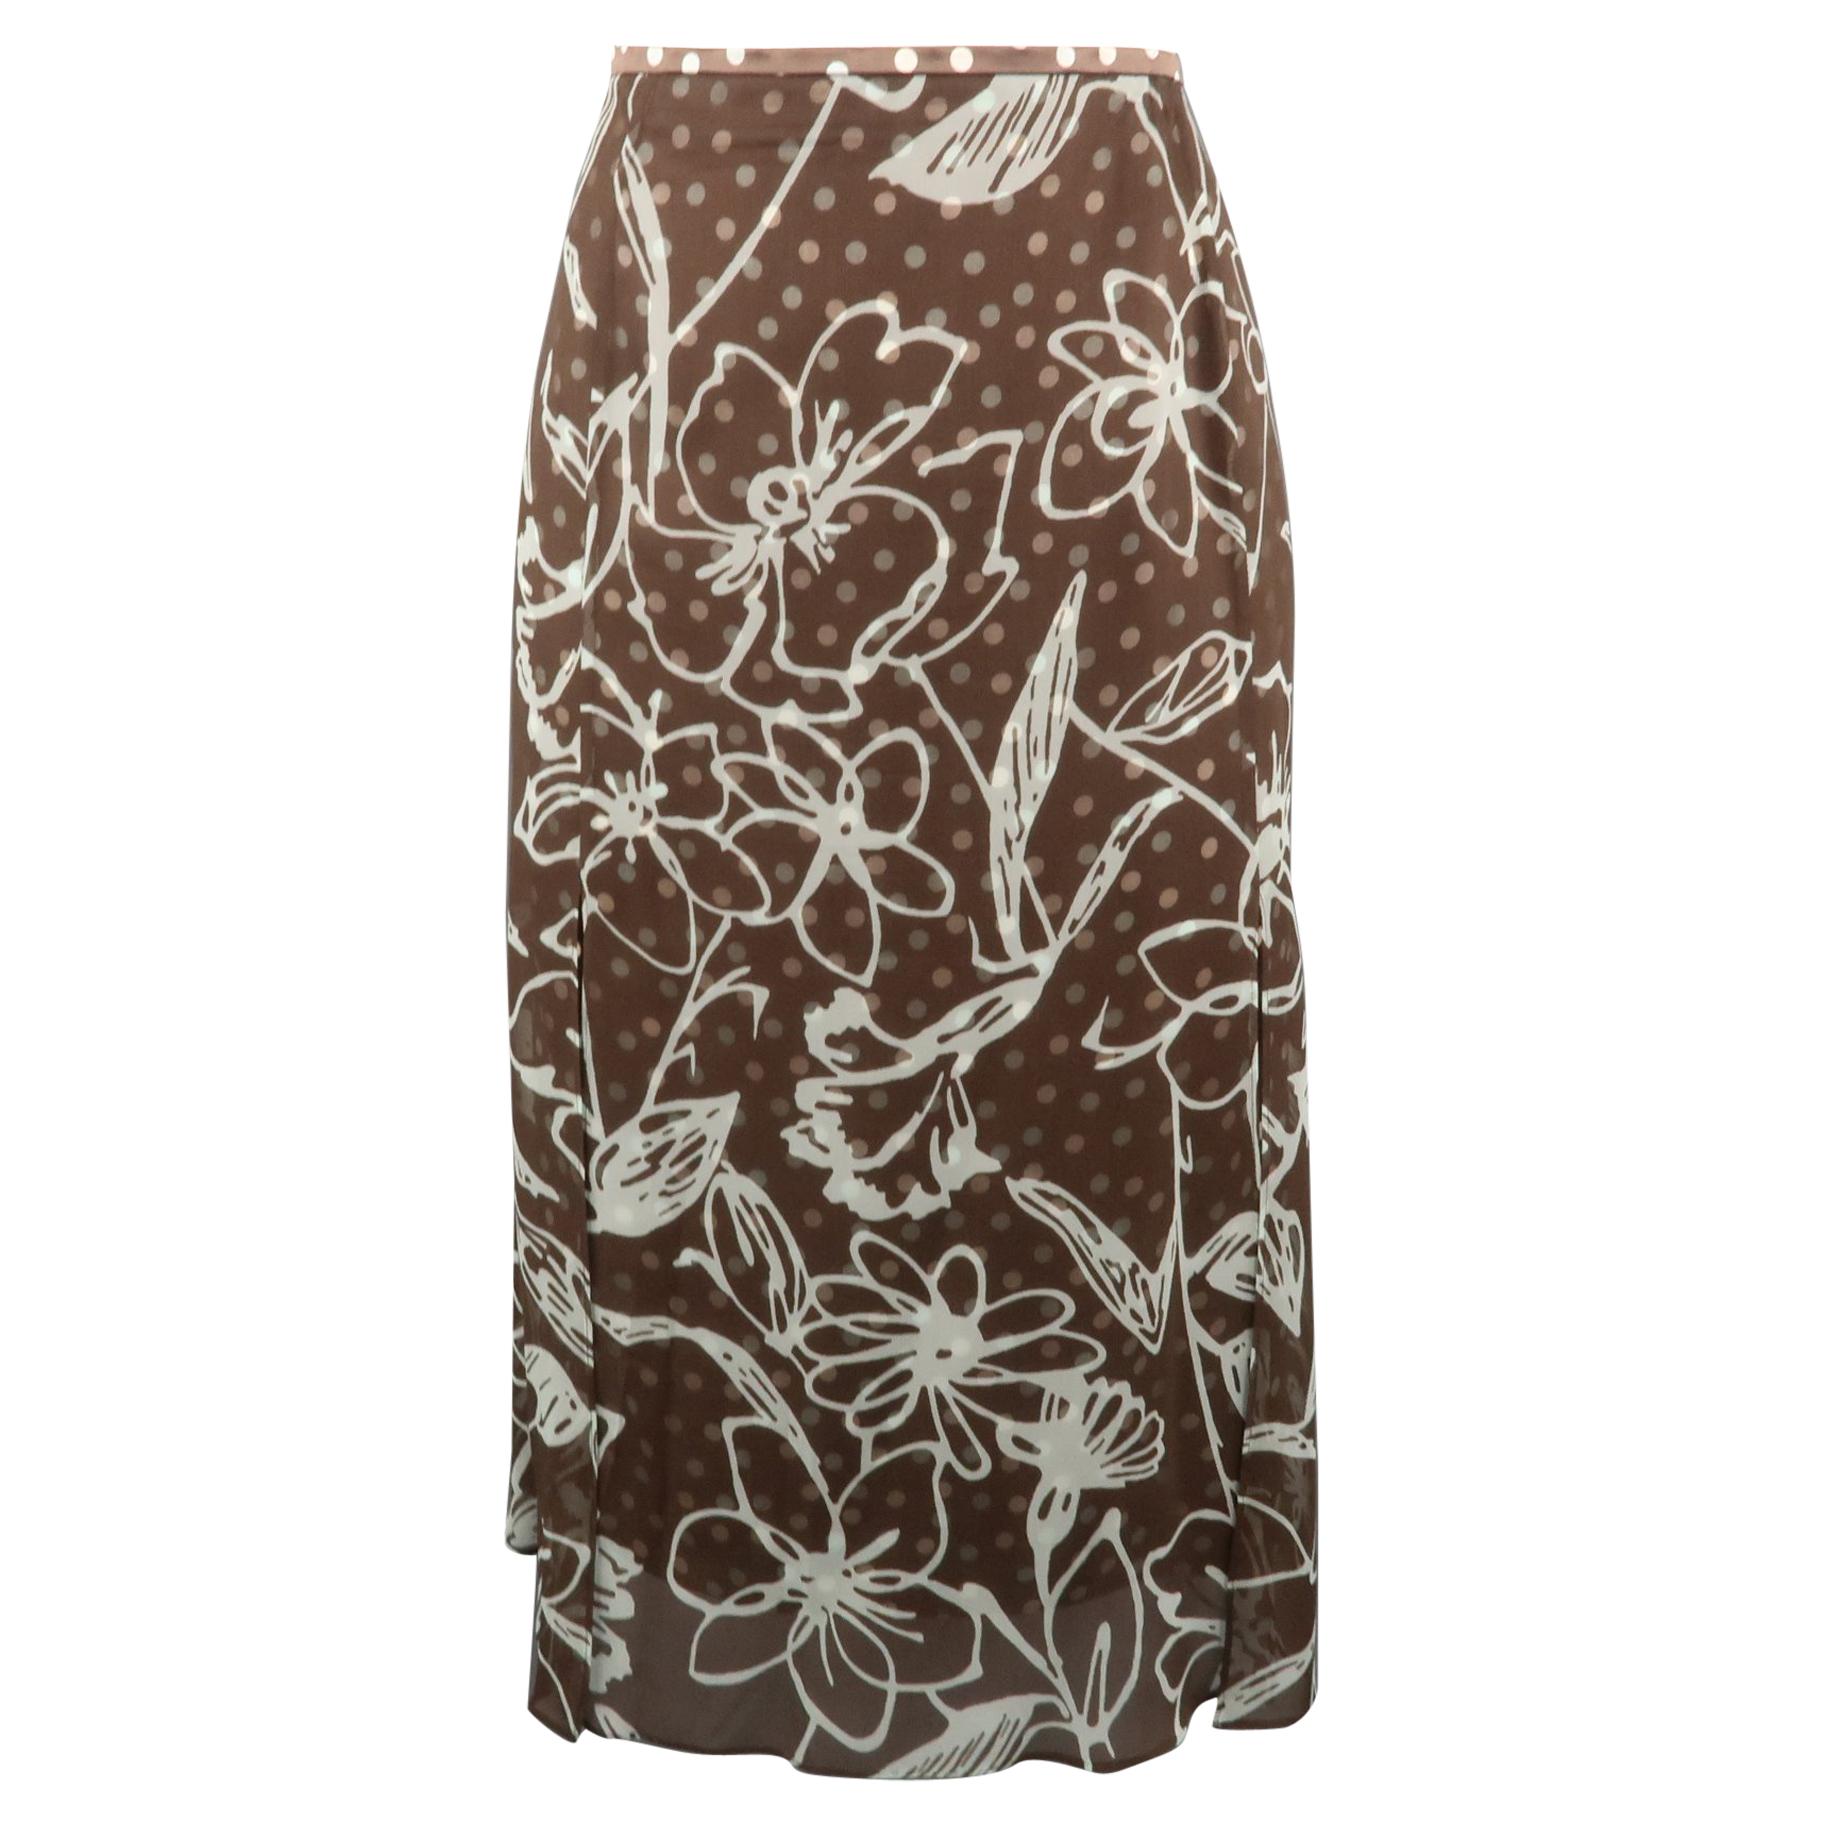 ESCADA Size 16 Brown & Teal Floral & Polka Dot Silk Chiffon Skirt